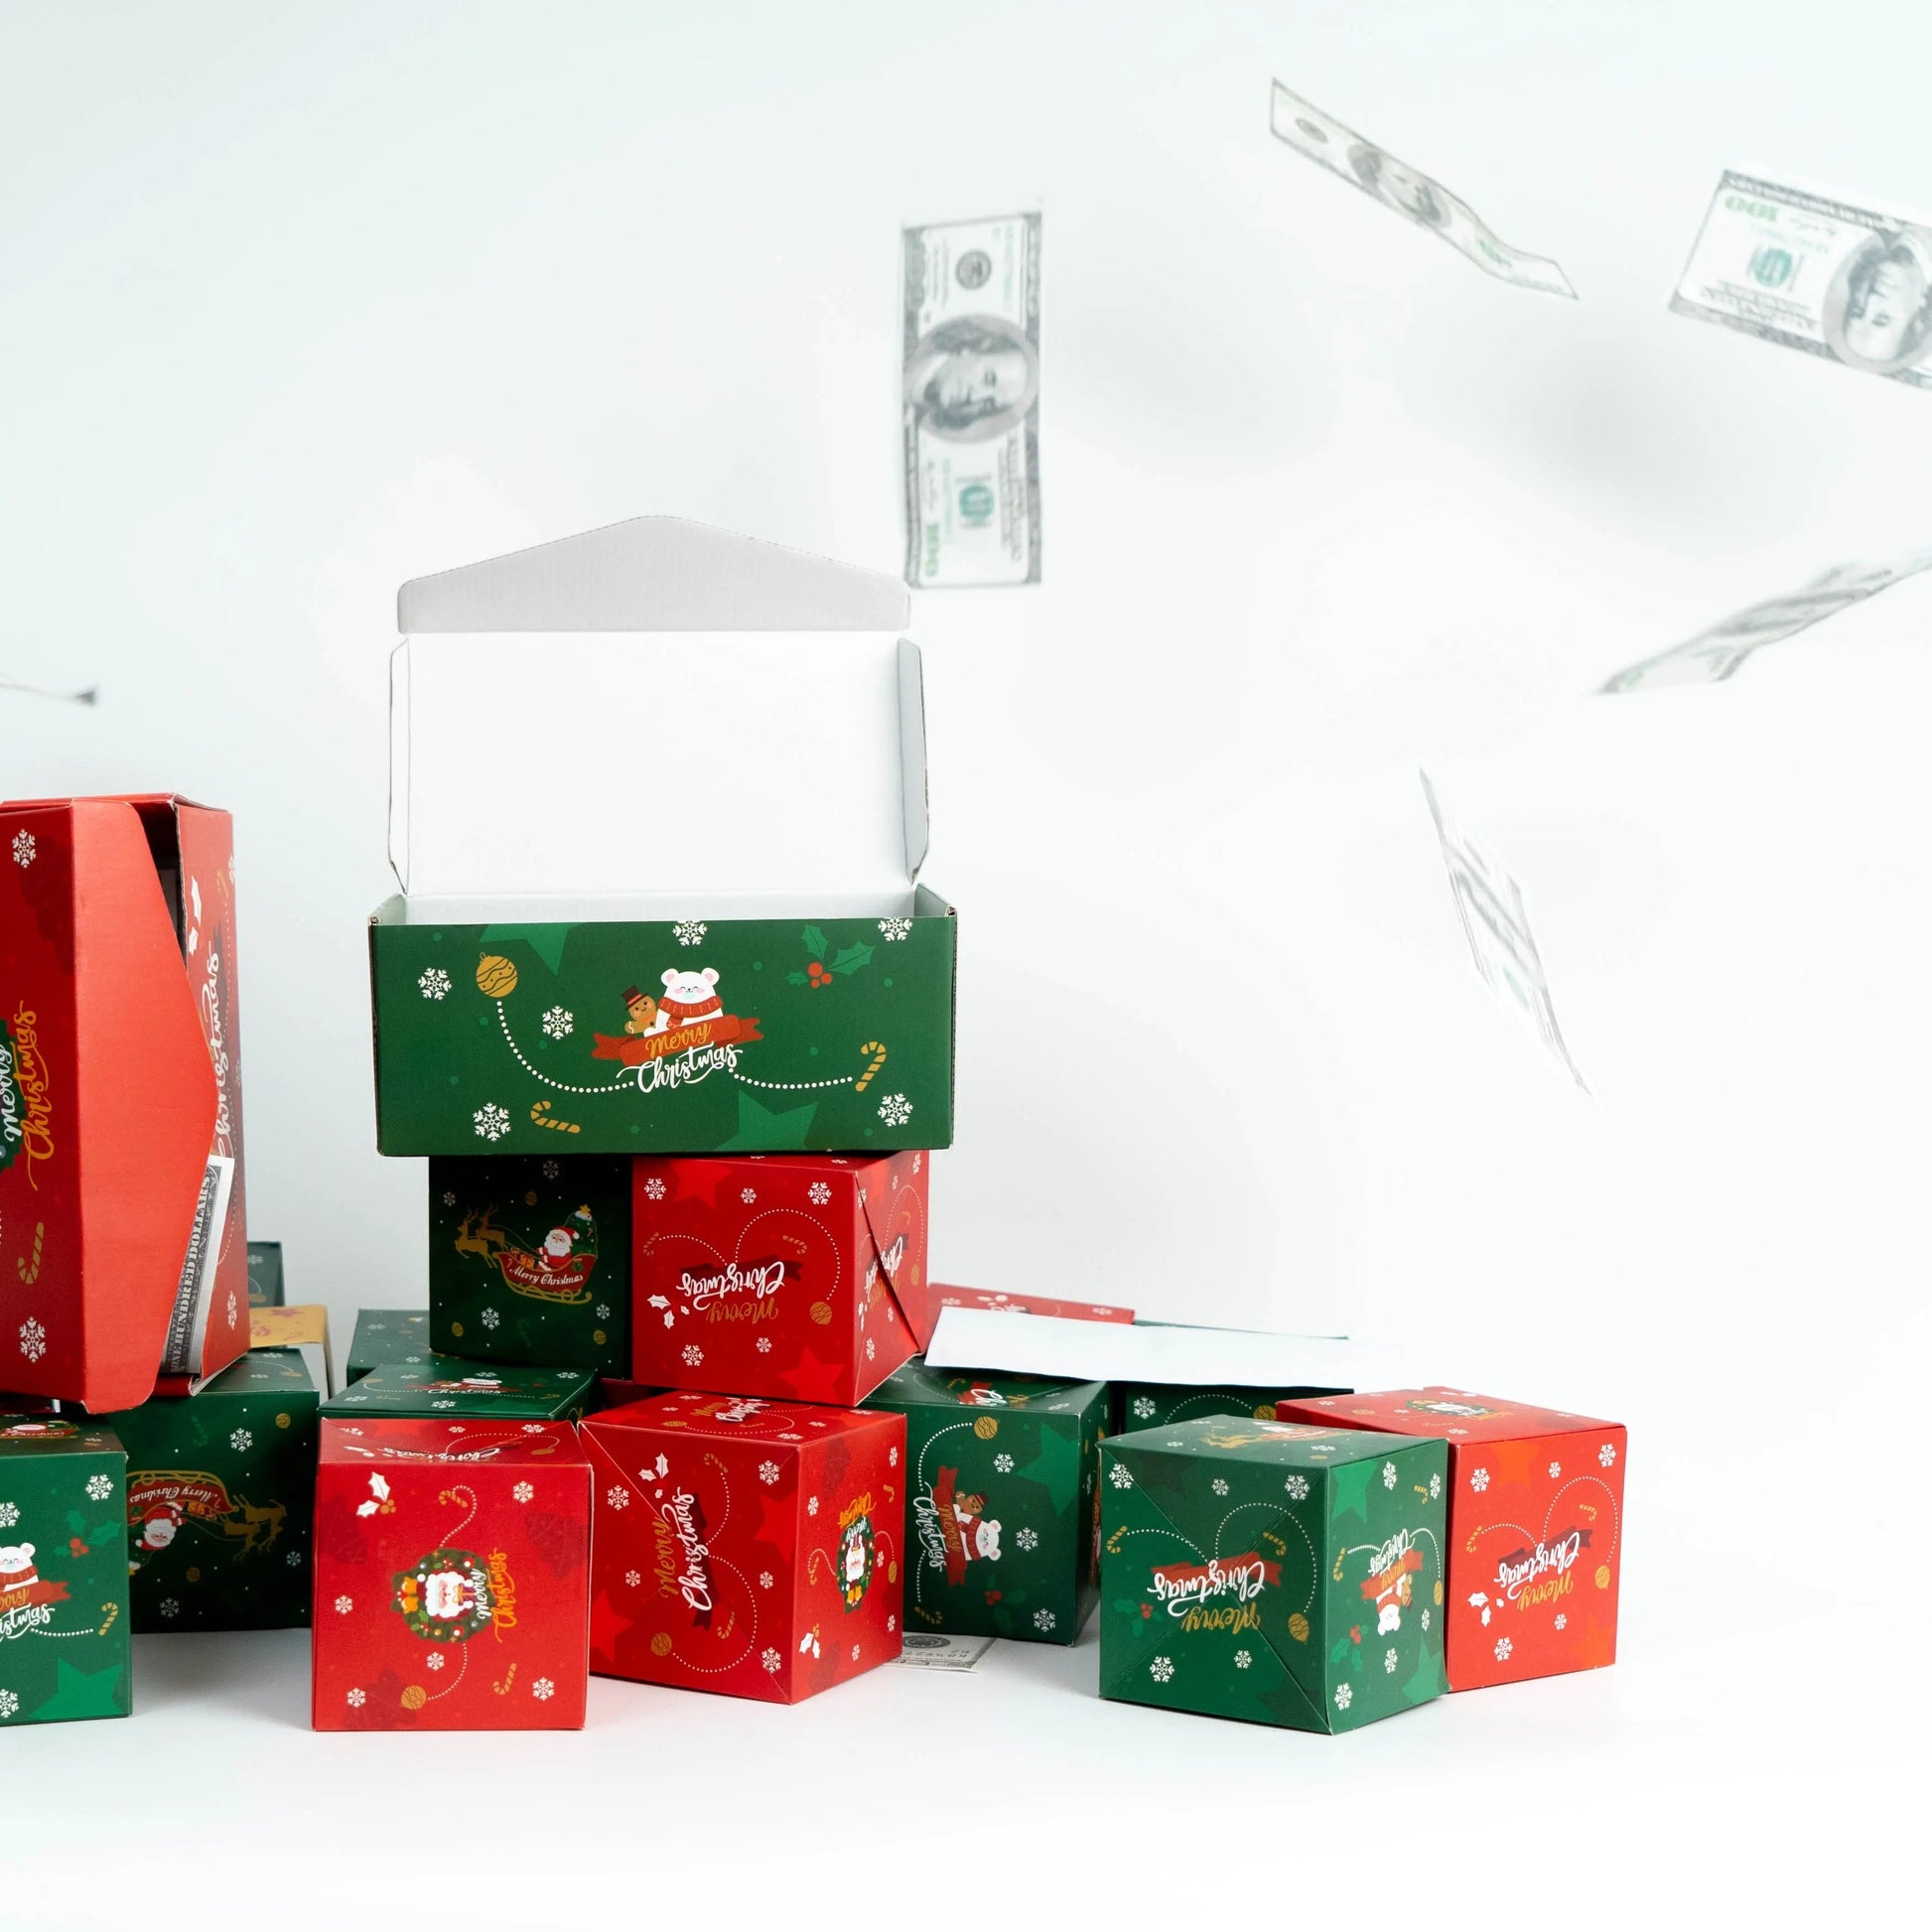 FairWonder Surprise Gift Box Explosion @anita.fiberartist